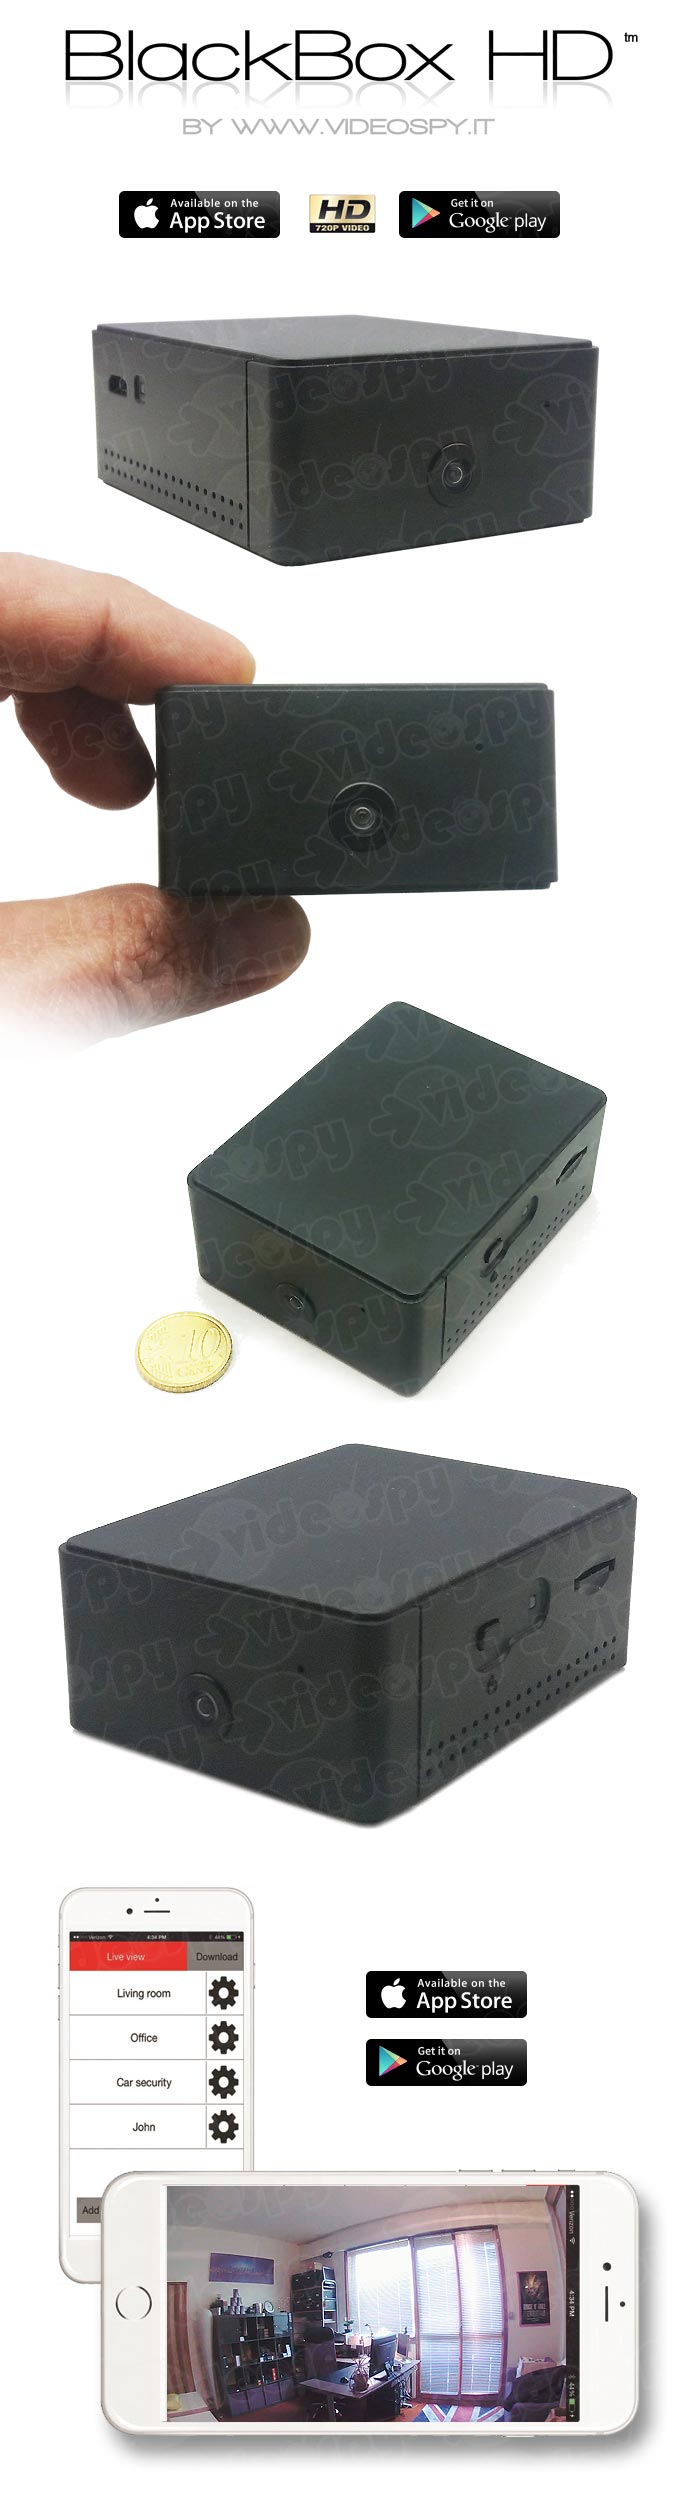 Microcamera wireless BlackBox WiFi